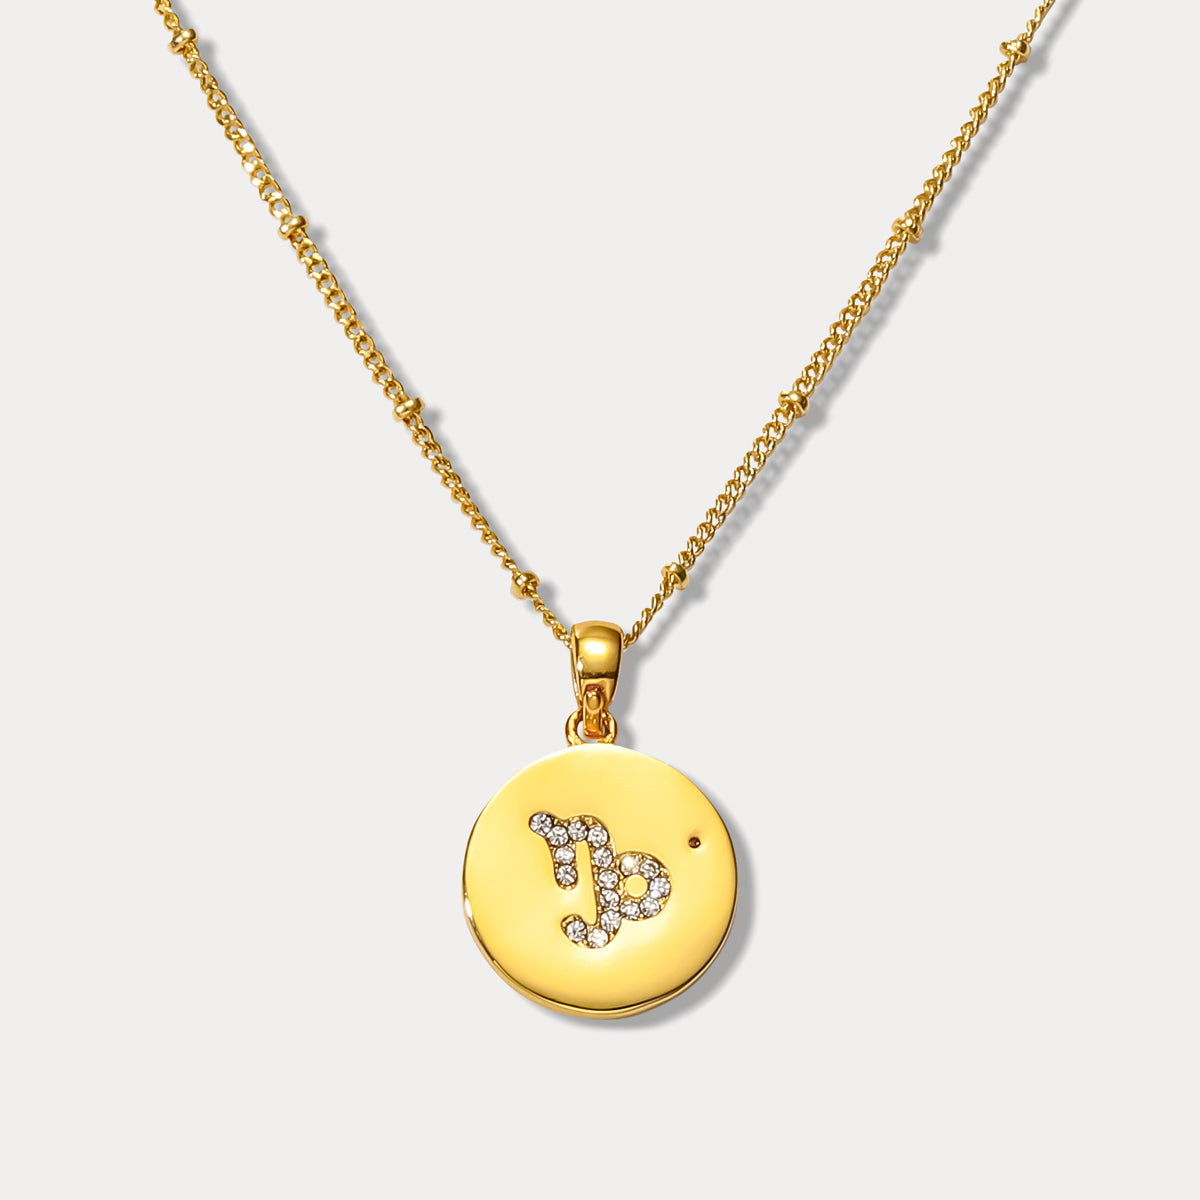 Capricorn Constellation Coin Pendant Chain Necklace